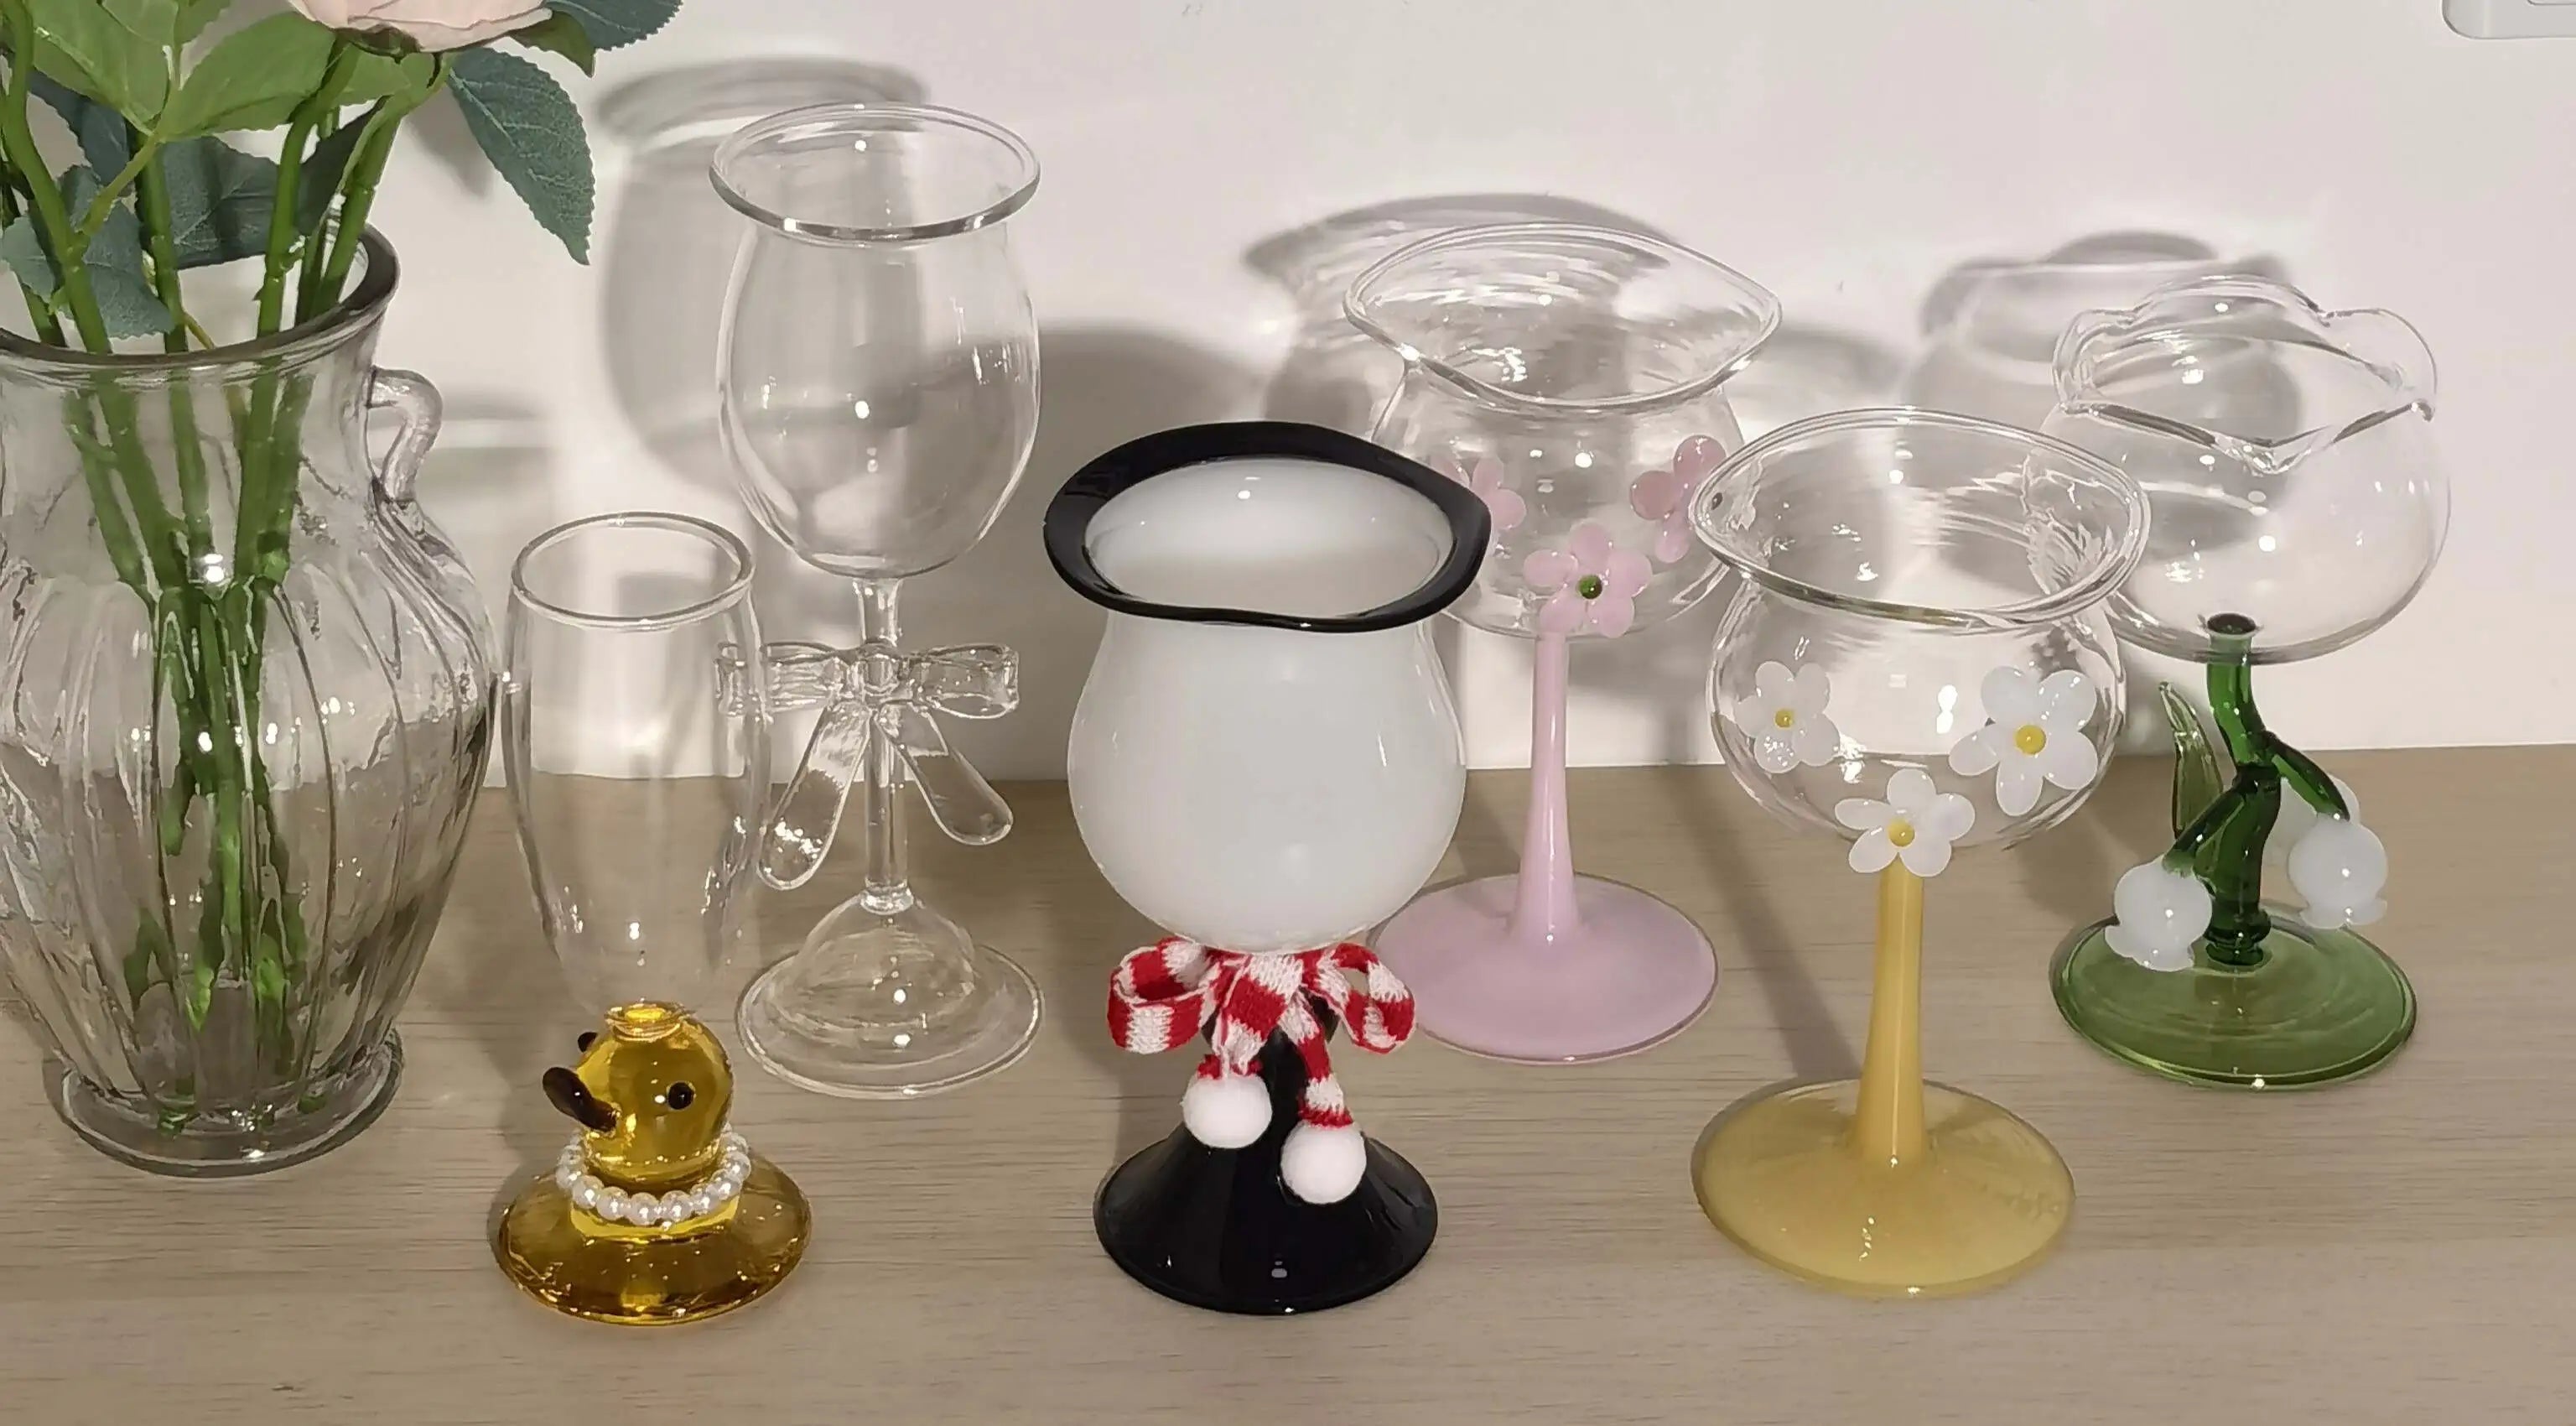 BiuHome fun glassware collections for home decor